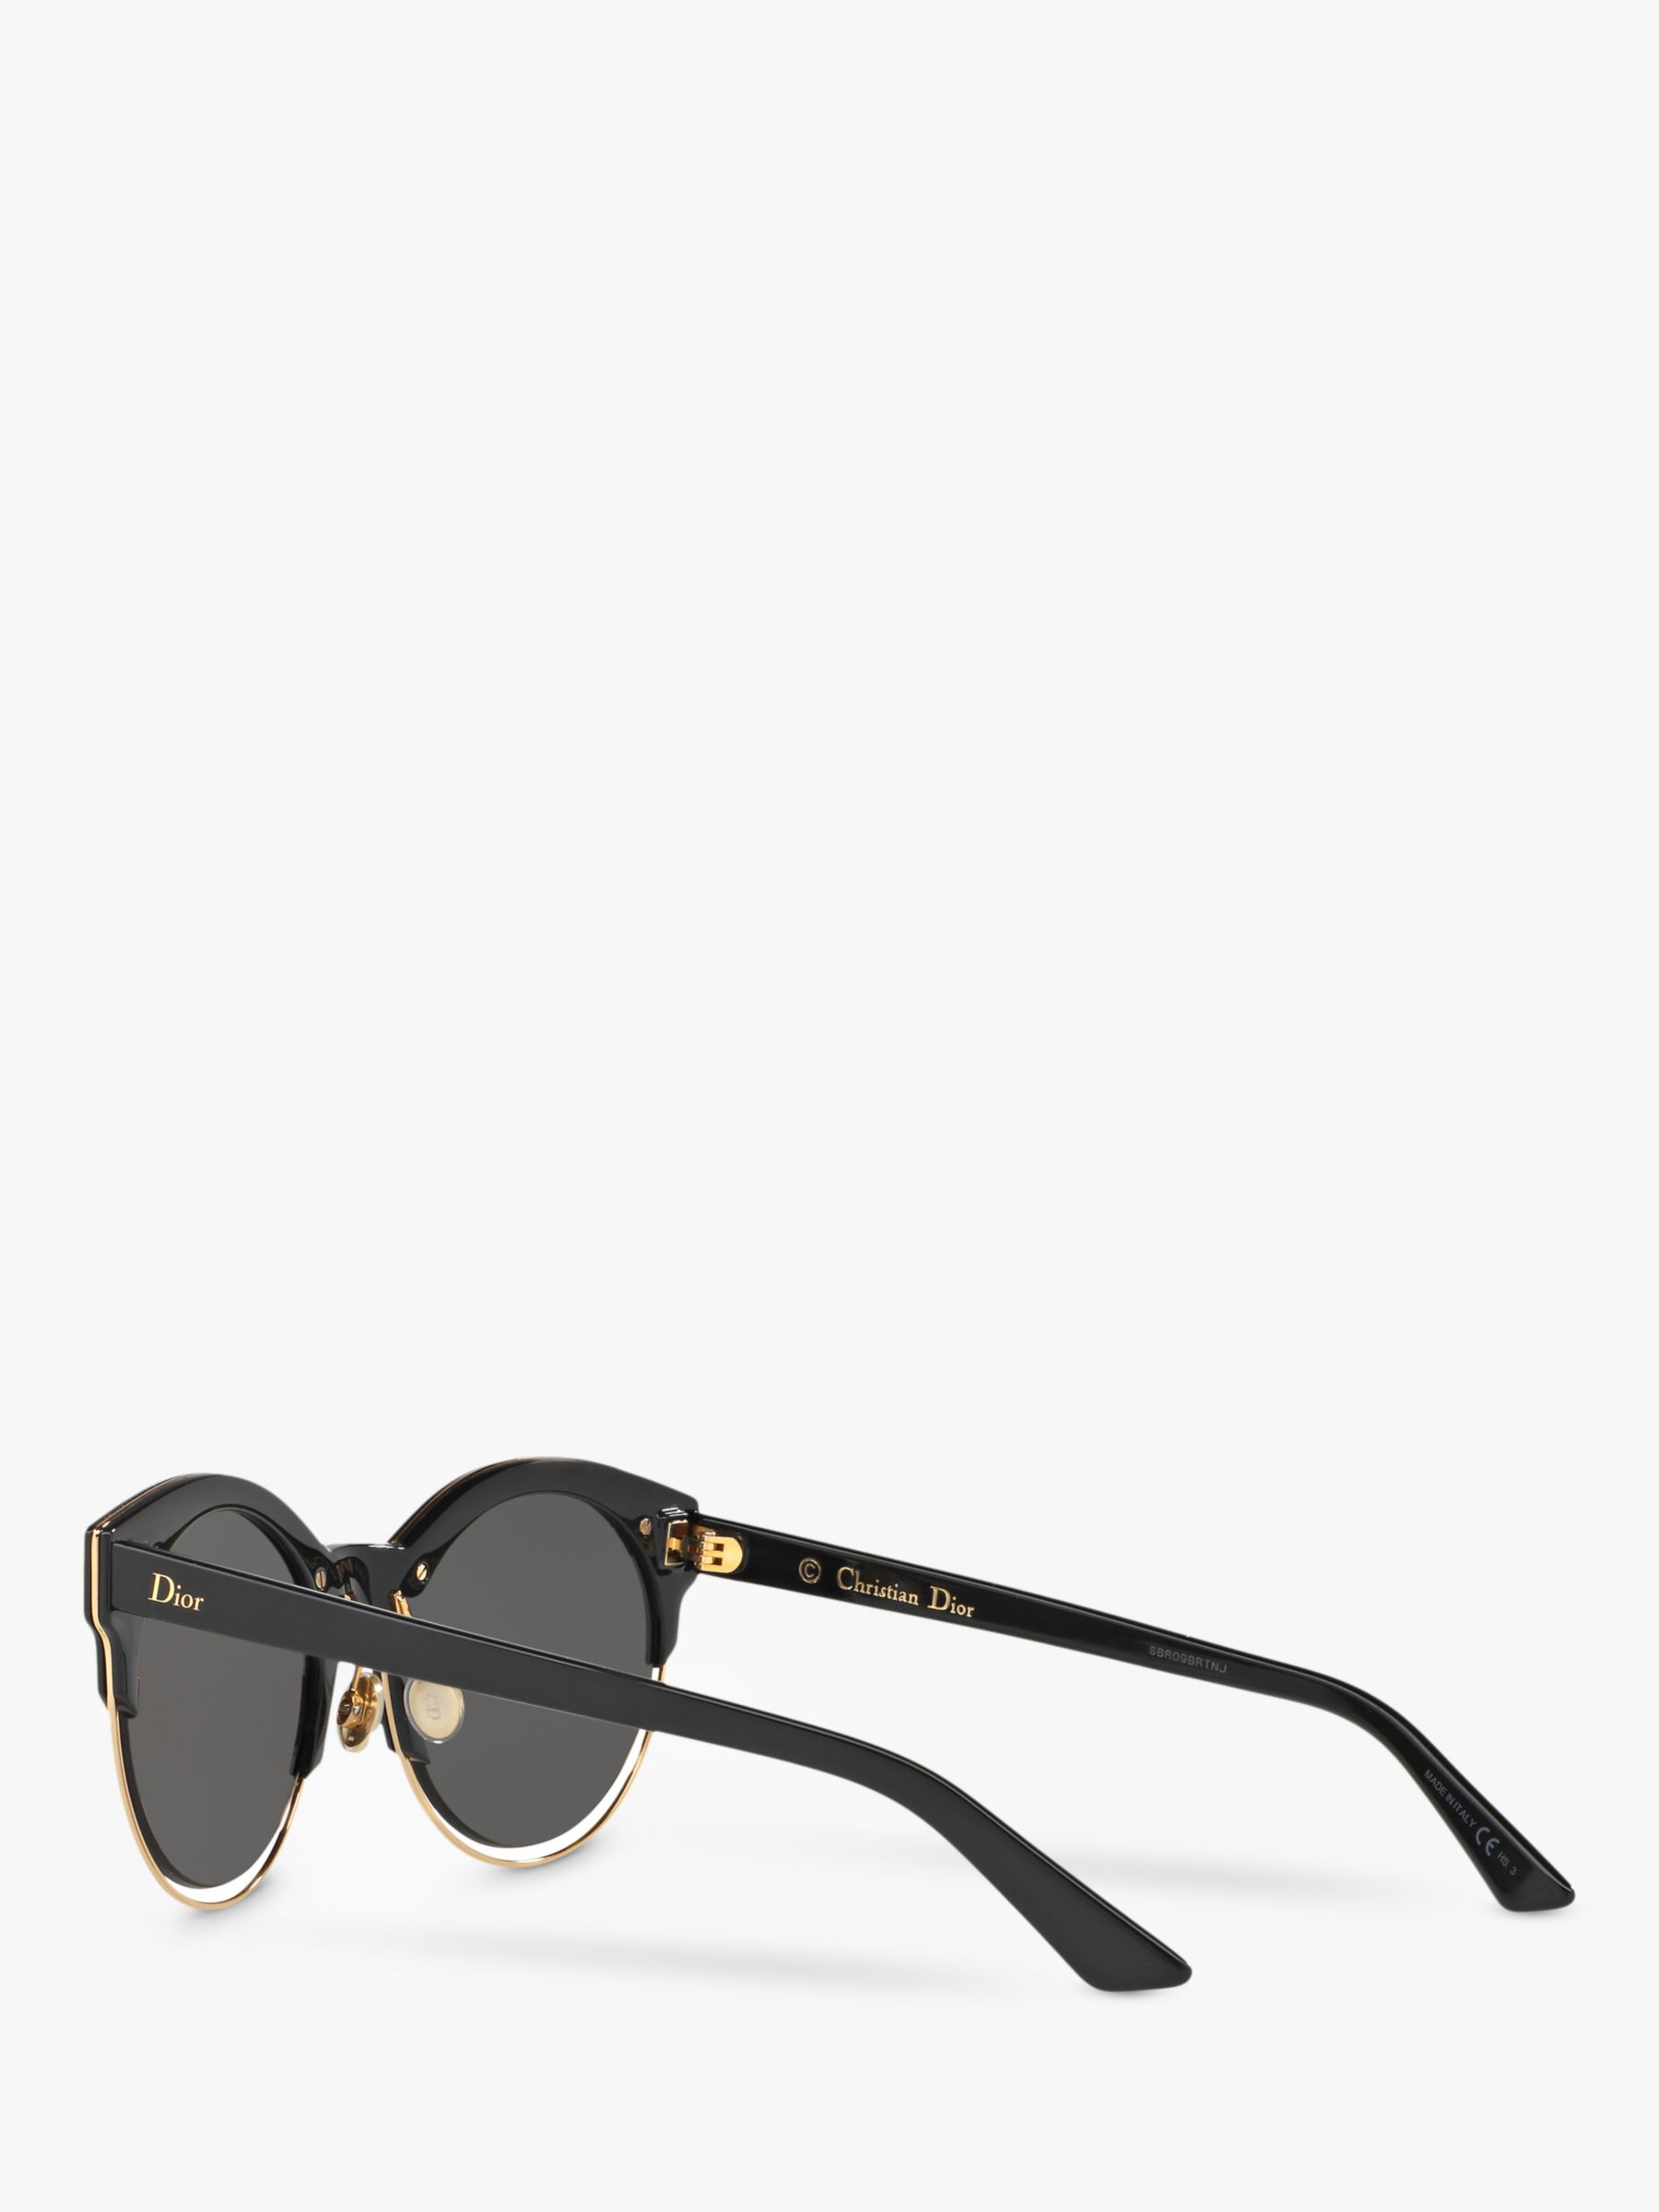 Dior Diorsoreal Women's Round Sunglasses, Black/Grey